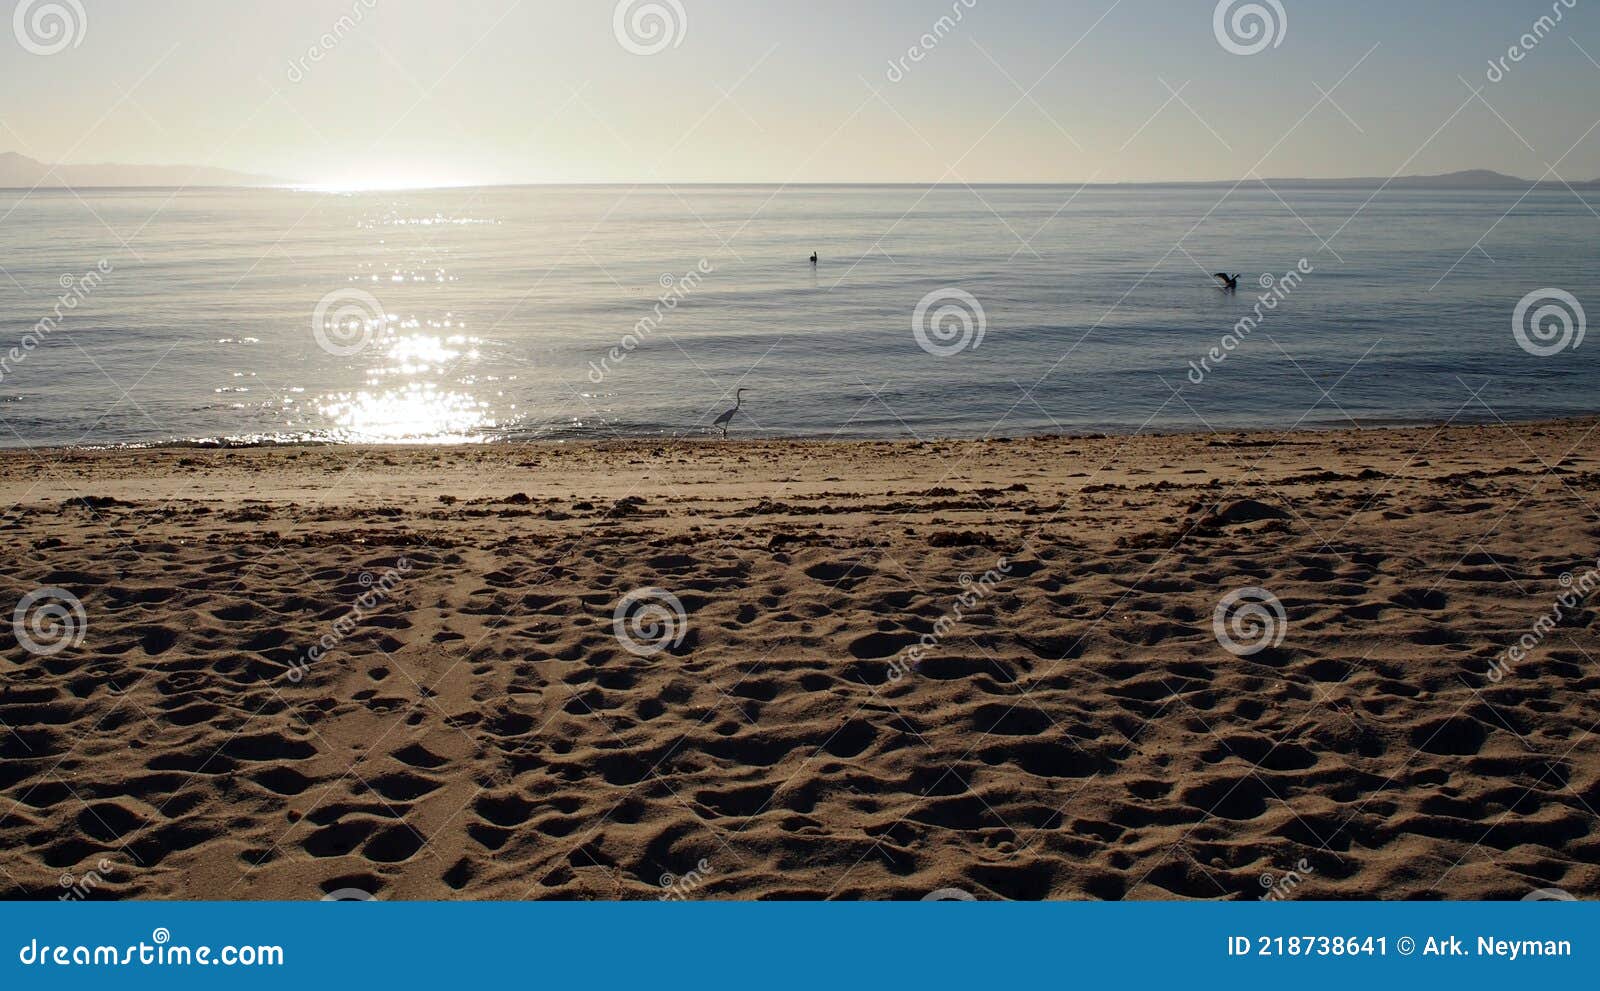 sandy beach on the shore of the sea of cortes, la ventana bay, bcs, mexico